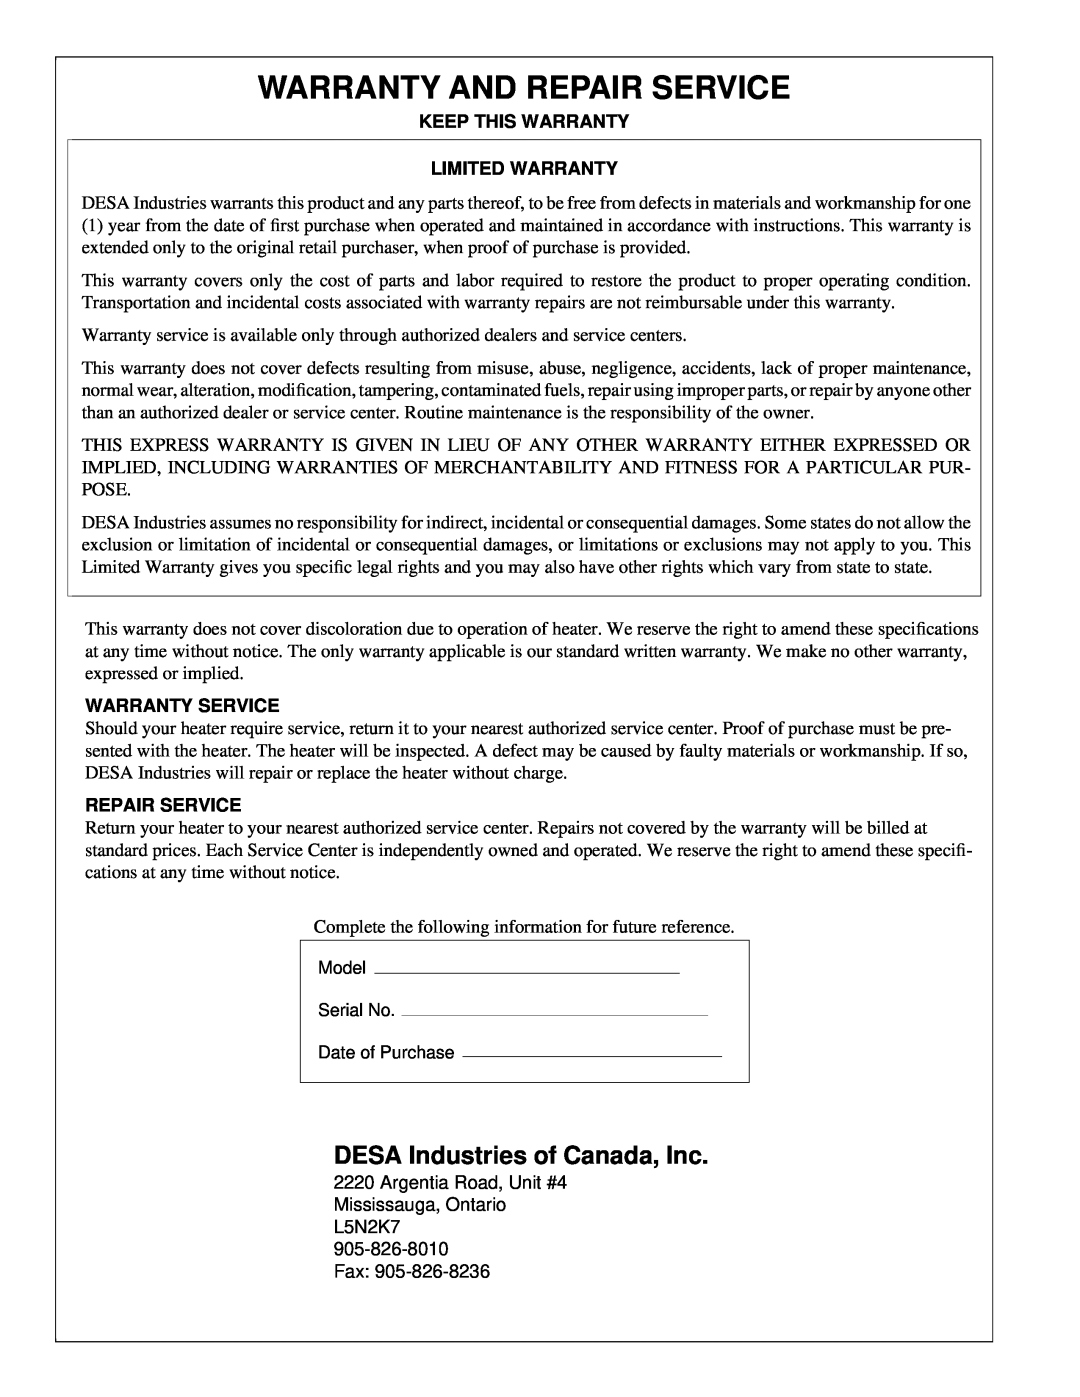 Desa RCLP50B owner manual Warranty And Repair Service, DESA Industries of Canada, Inc, Keep This Warranty Limited Warranty 